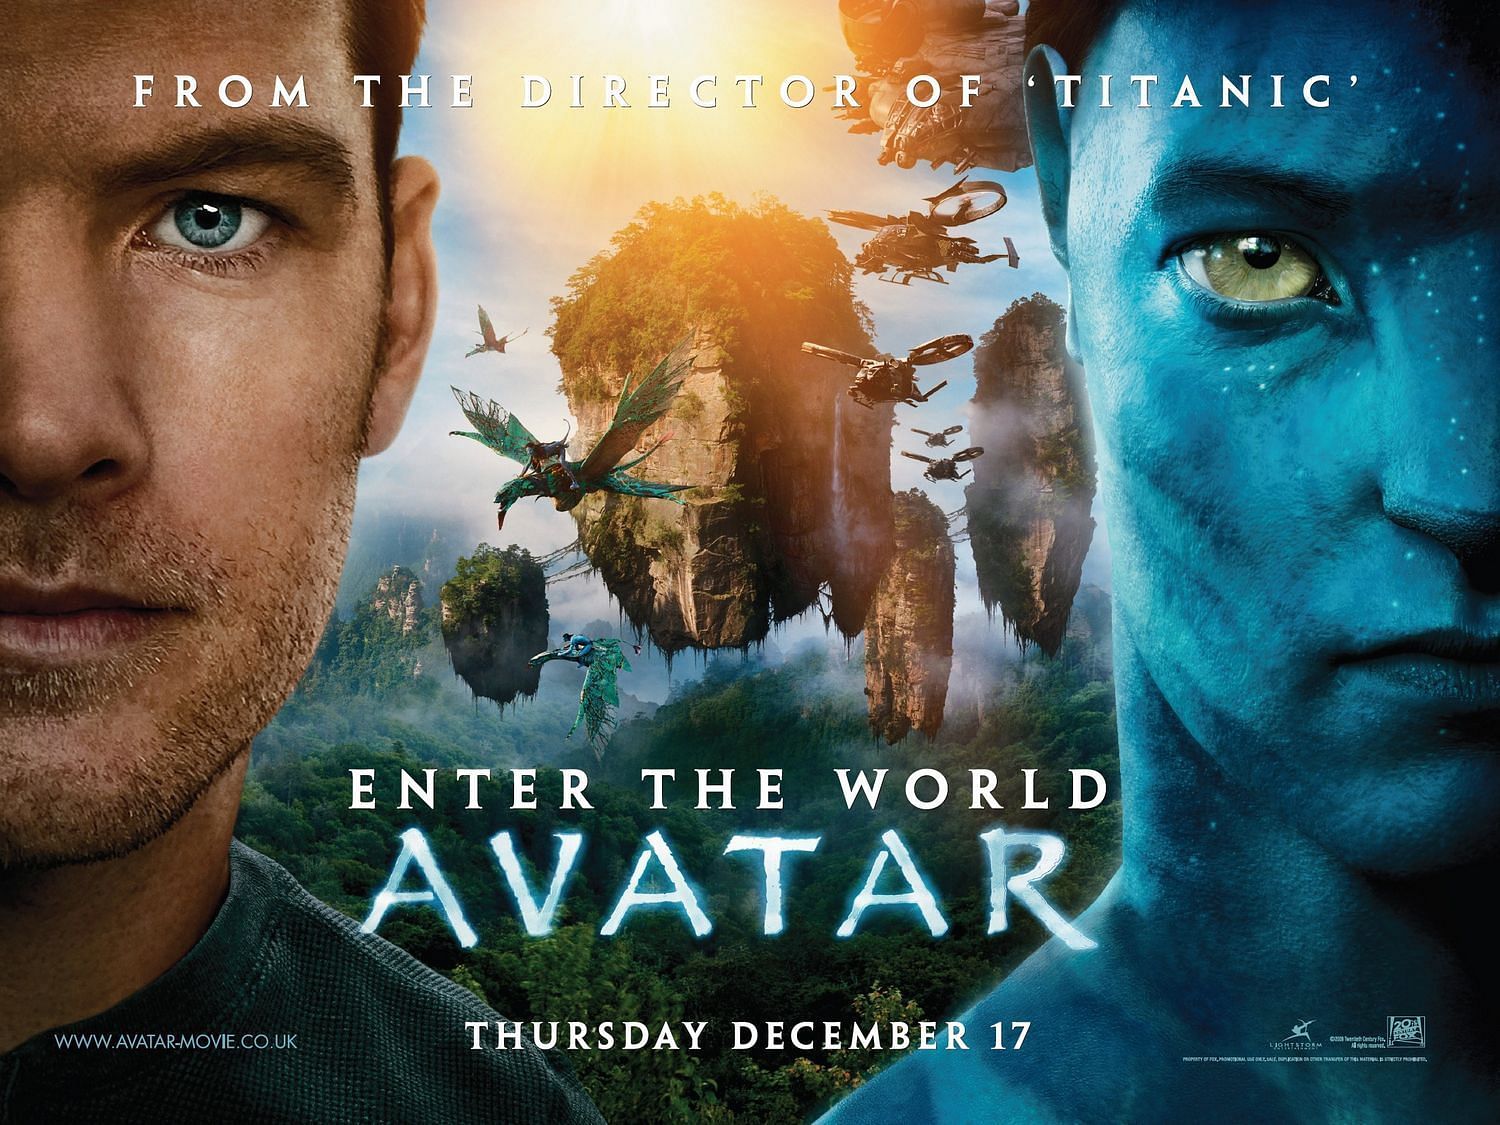 Avatar (Image via 20th Century Fox)